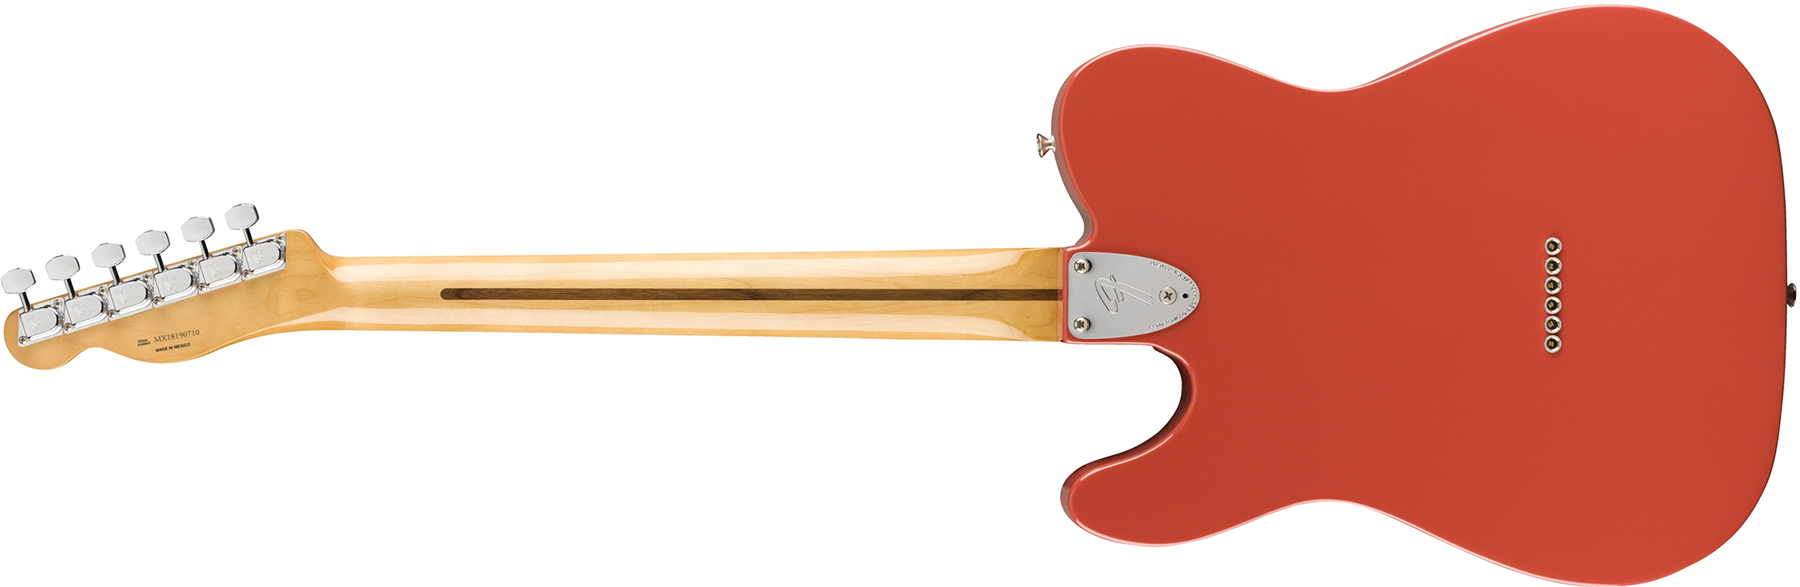 Fender Tele 70s Custom Vintera Vintage Mex Hh Pf - Fiesta Red - Televorm elektrische gitaar - Variation 1